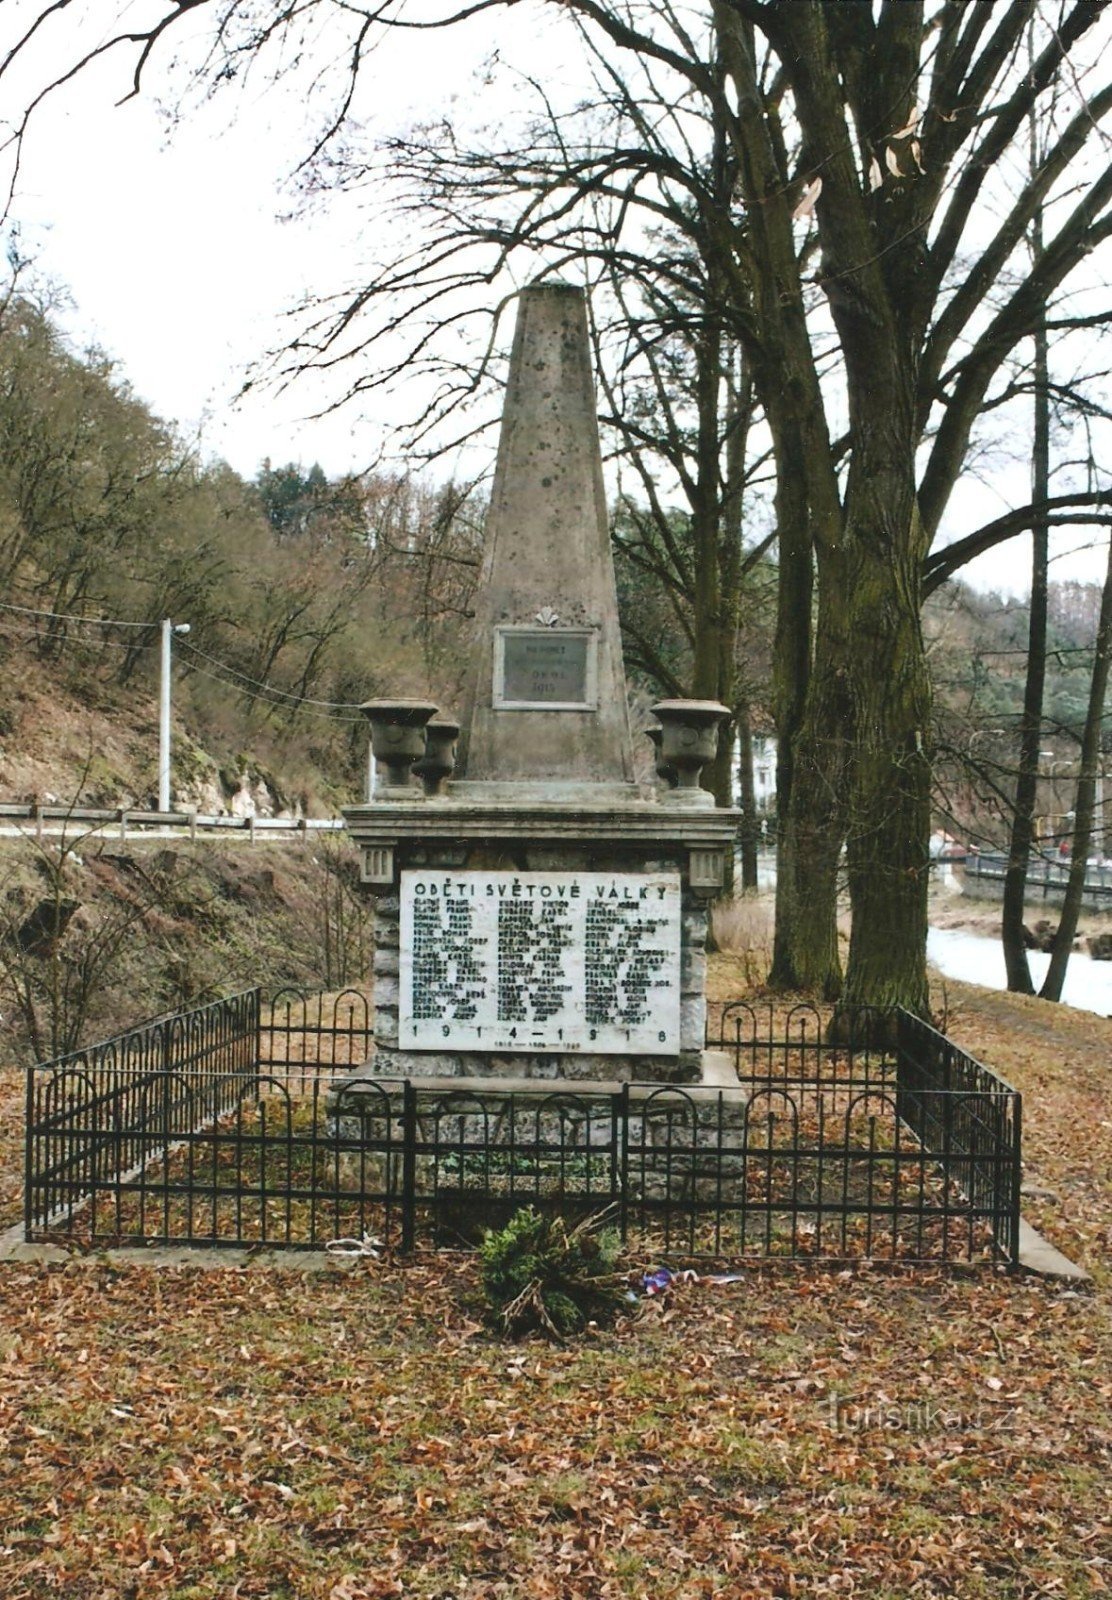 Monumento às vítimas da Primeira Guerra Mundial